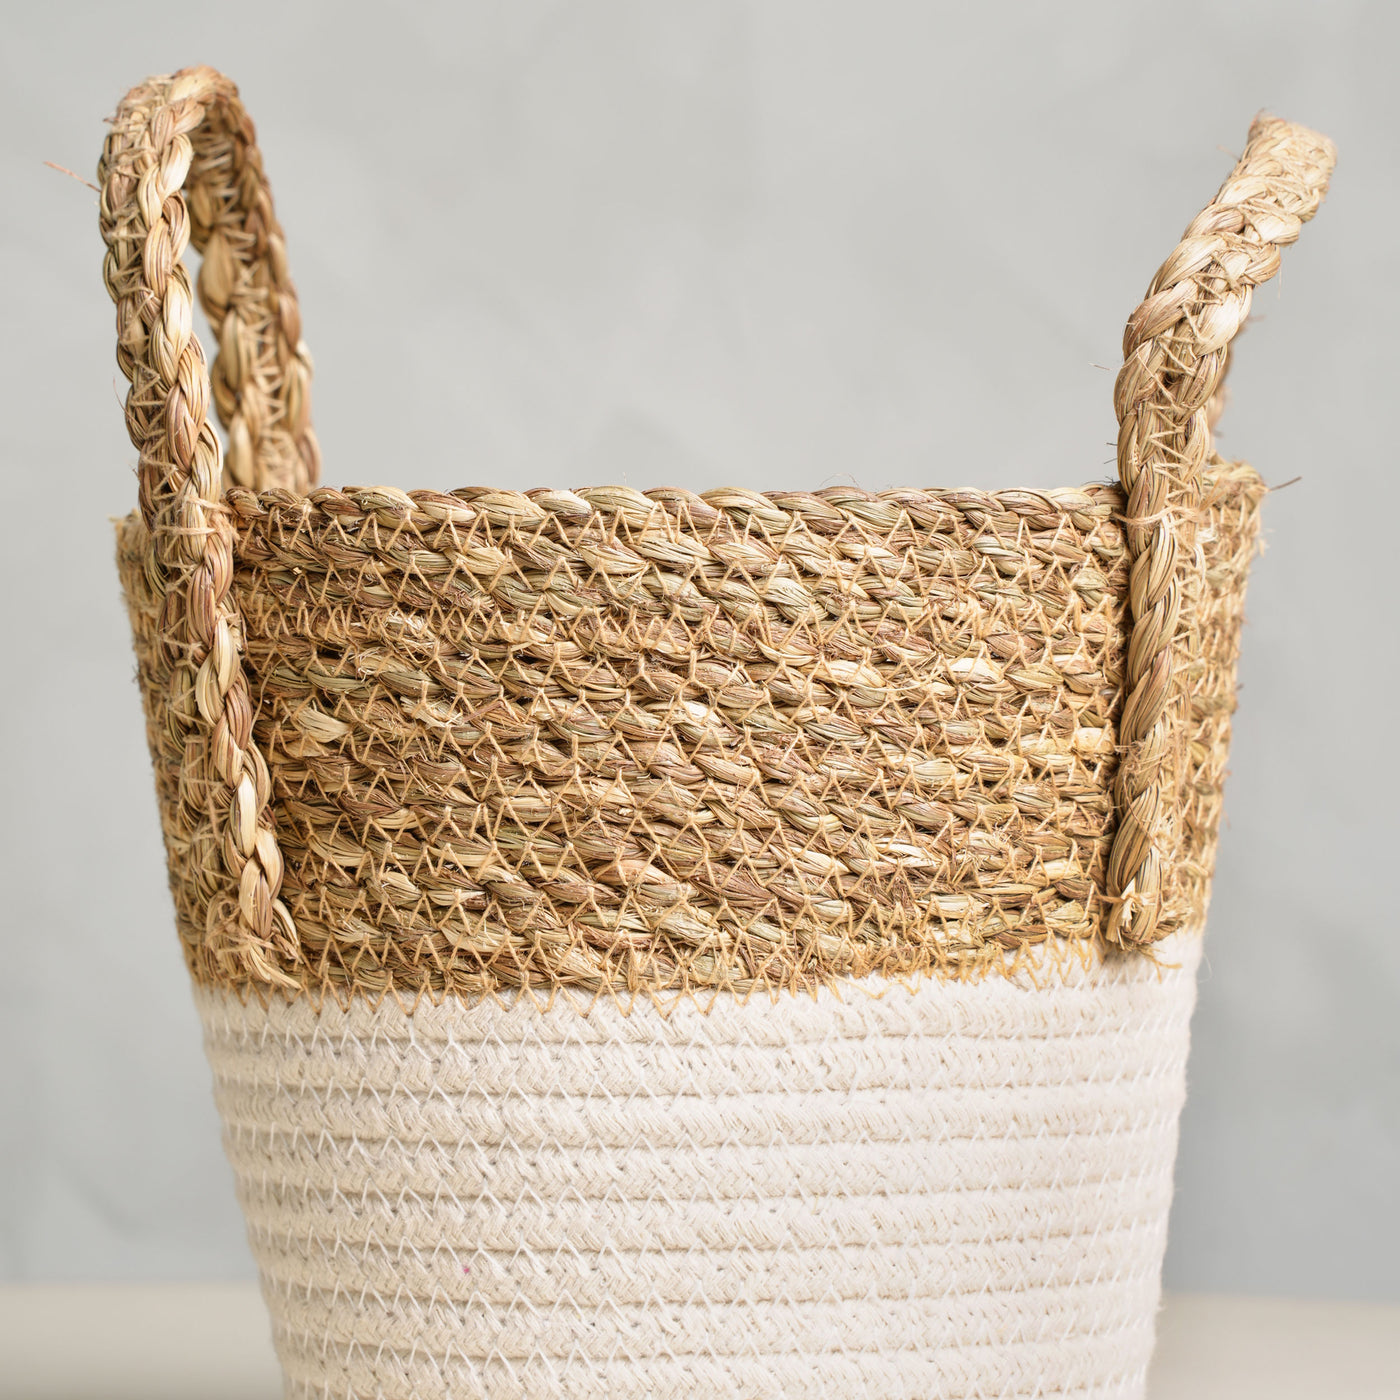 Yam Two-Toned Woven Basket